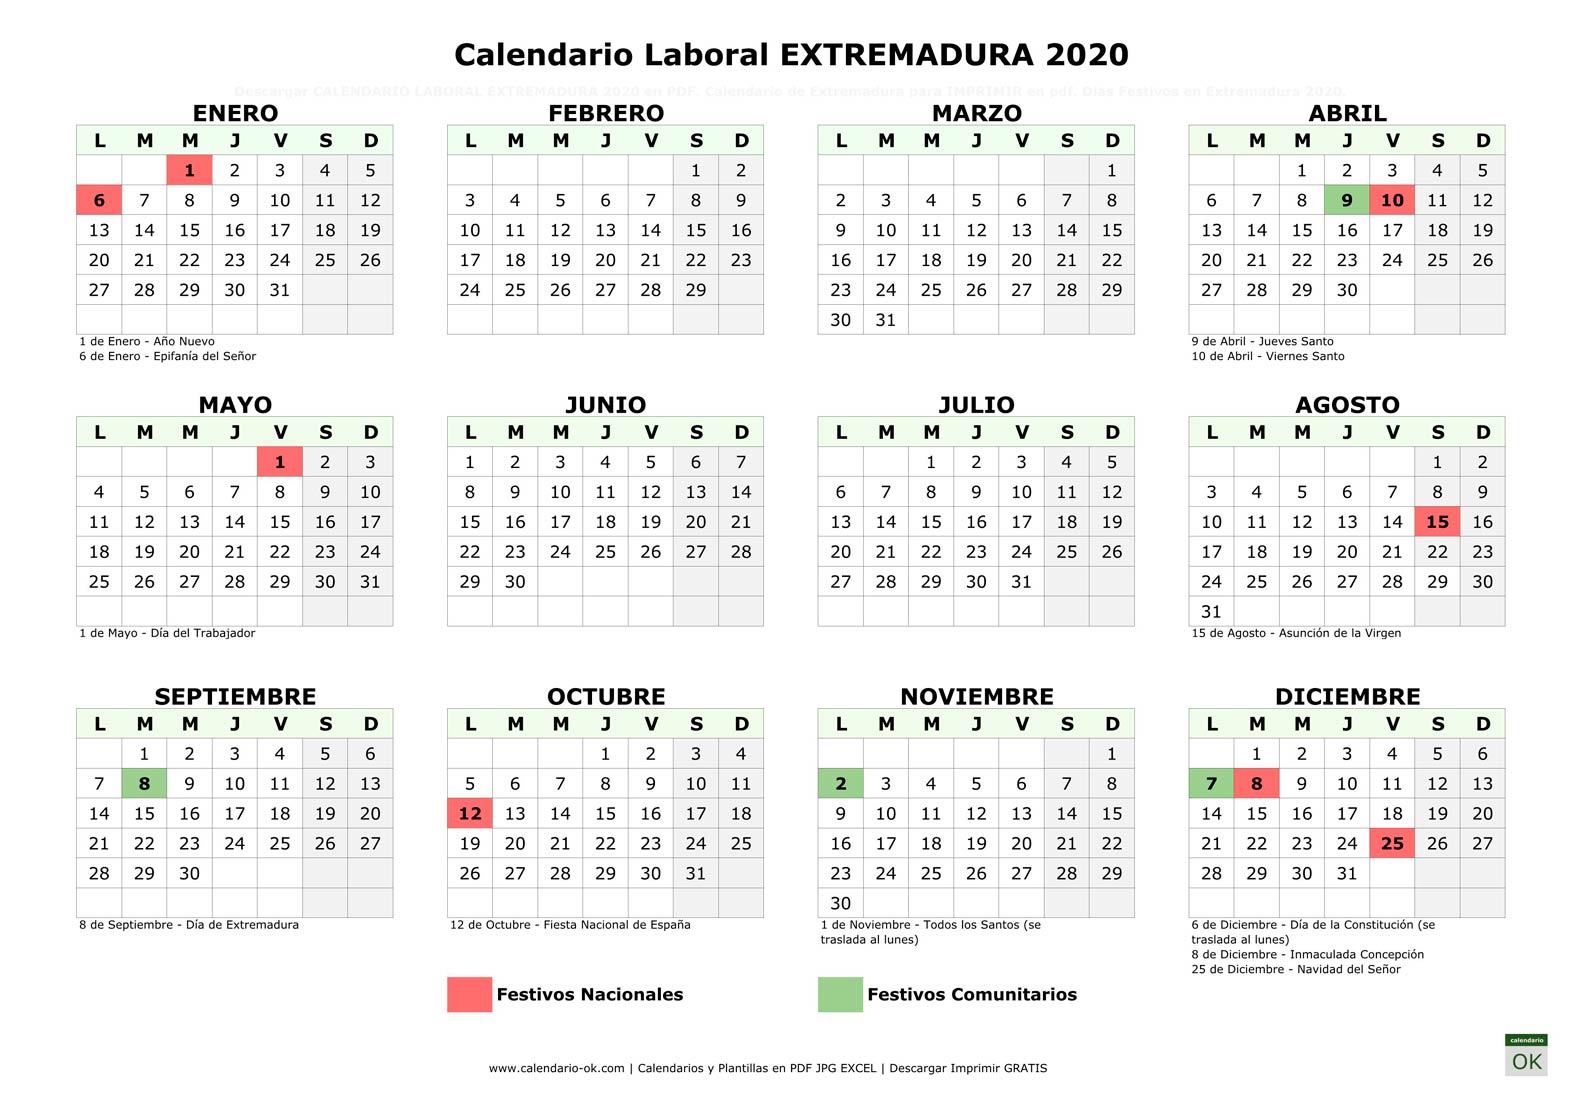 Calendario Laboral EXTREMADURA 2020 horizontal